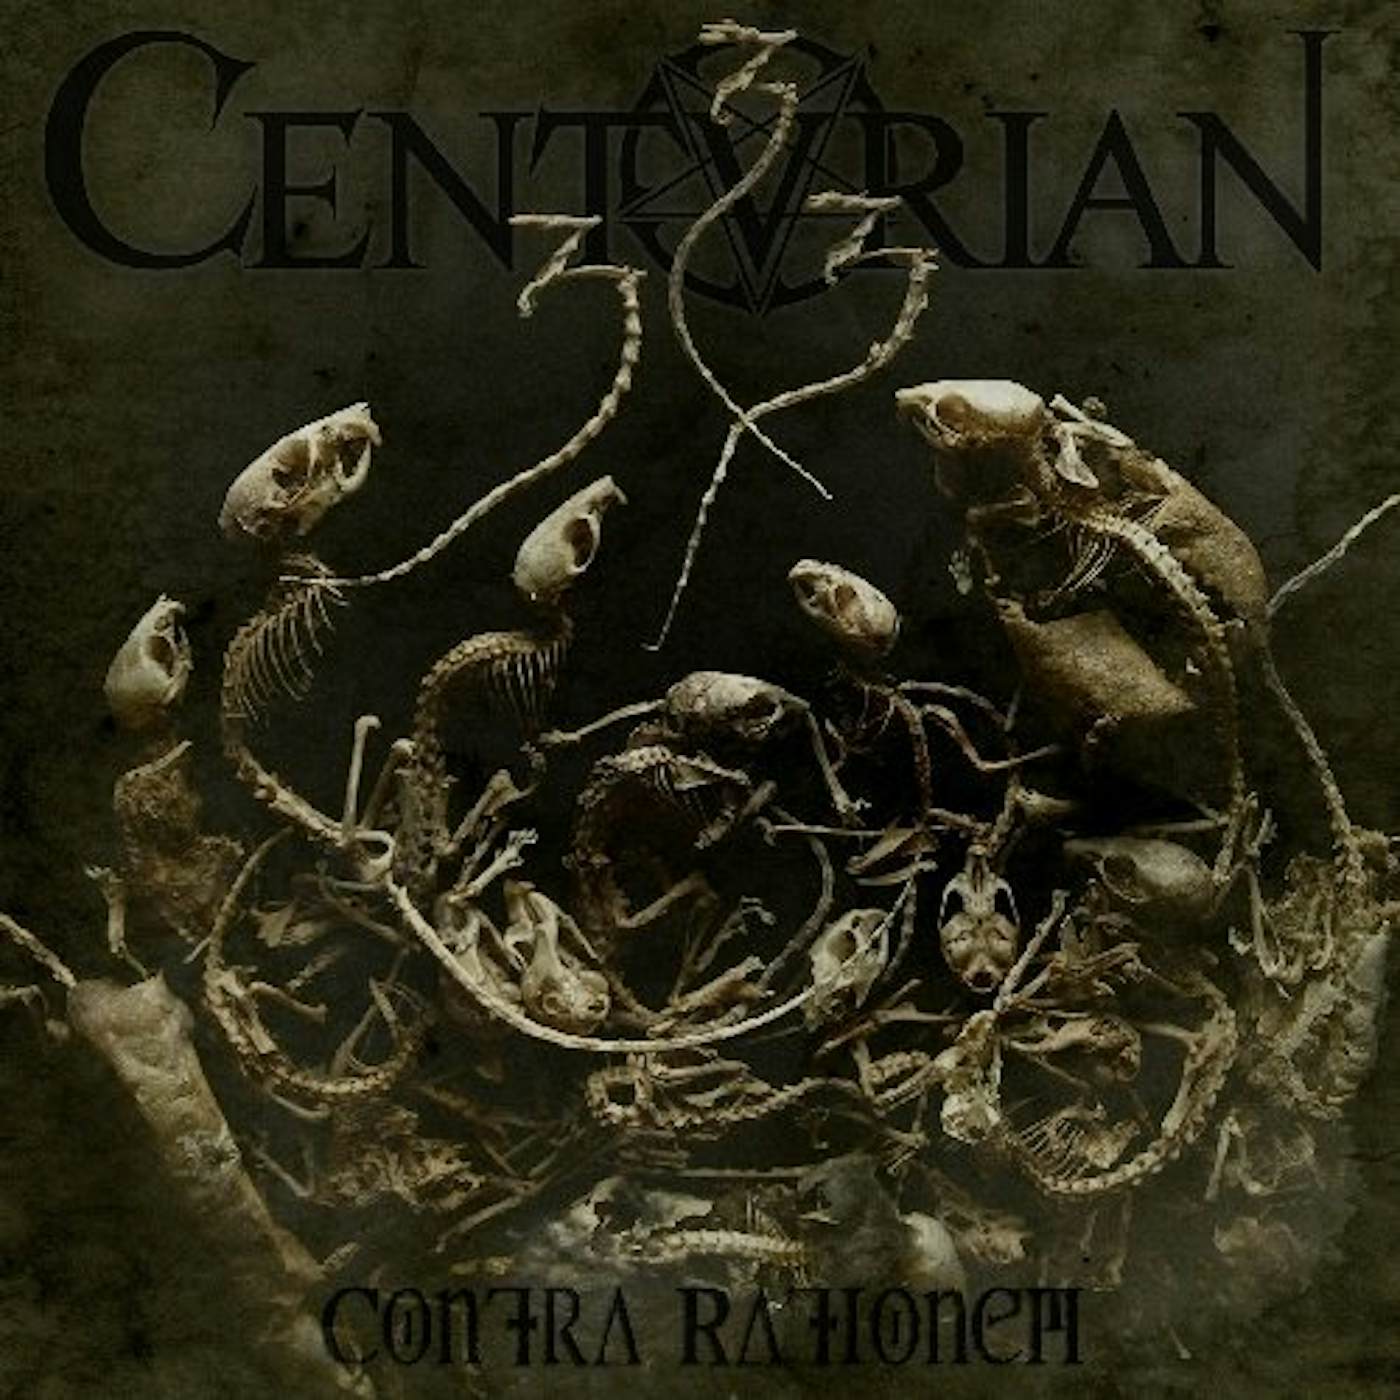 Centurian CONTRA RATIONEM CD